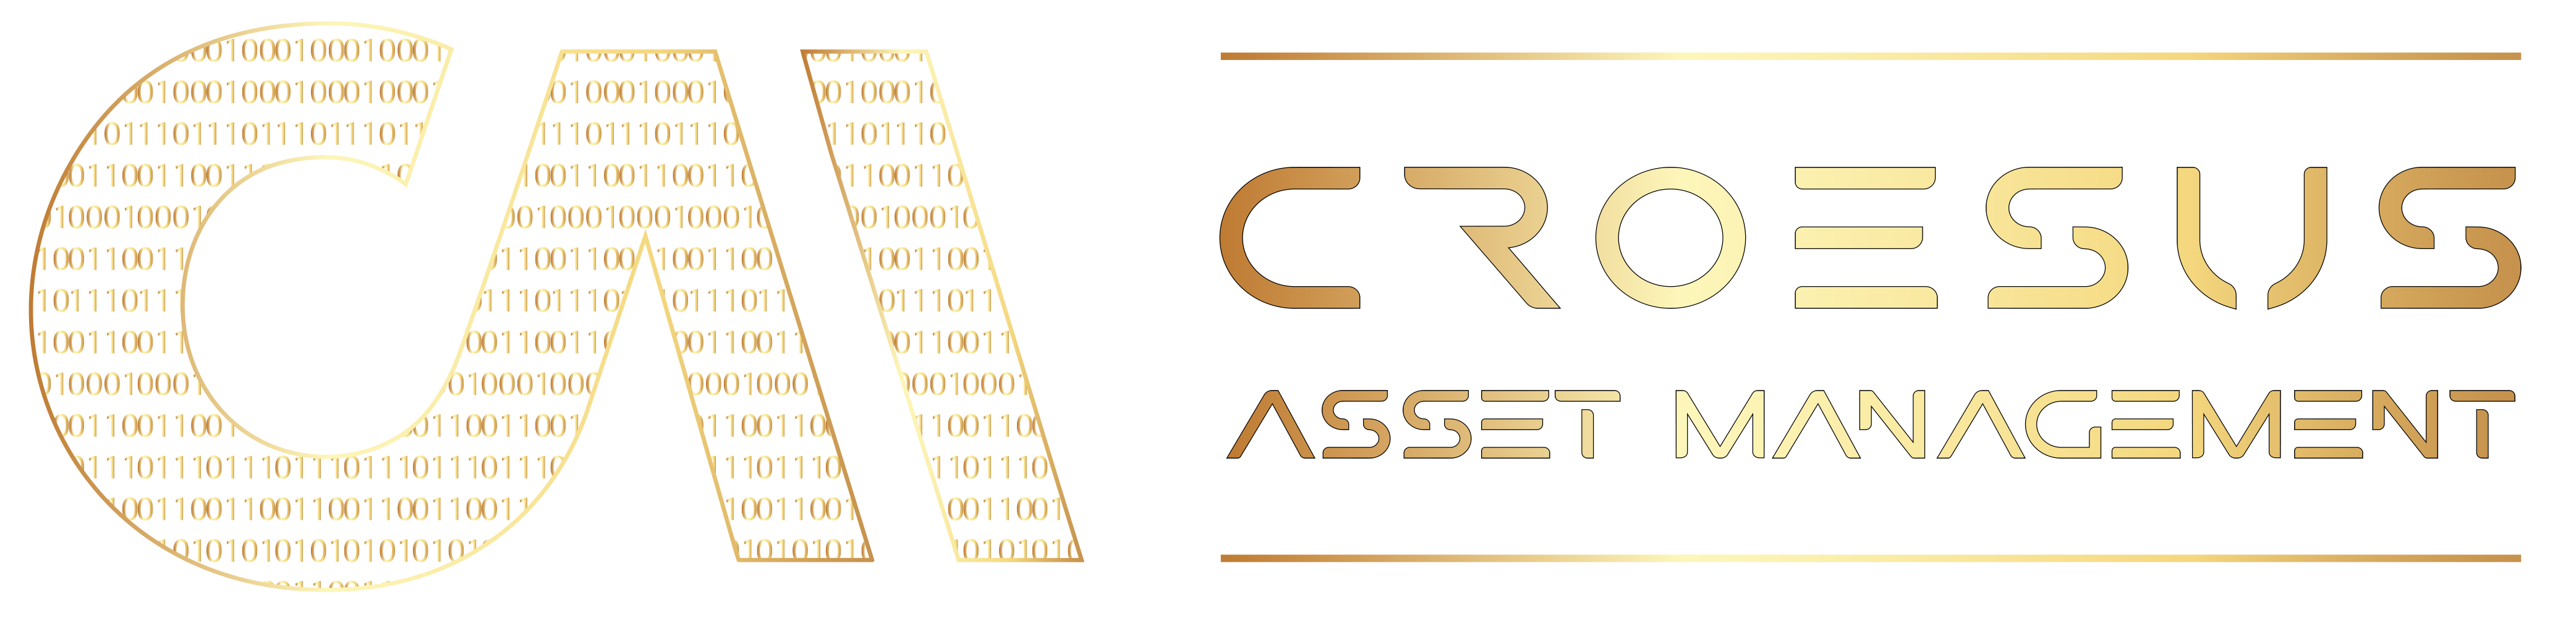 Croesus Asset Management